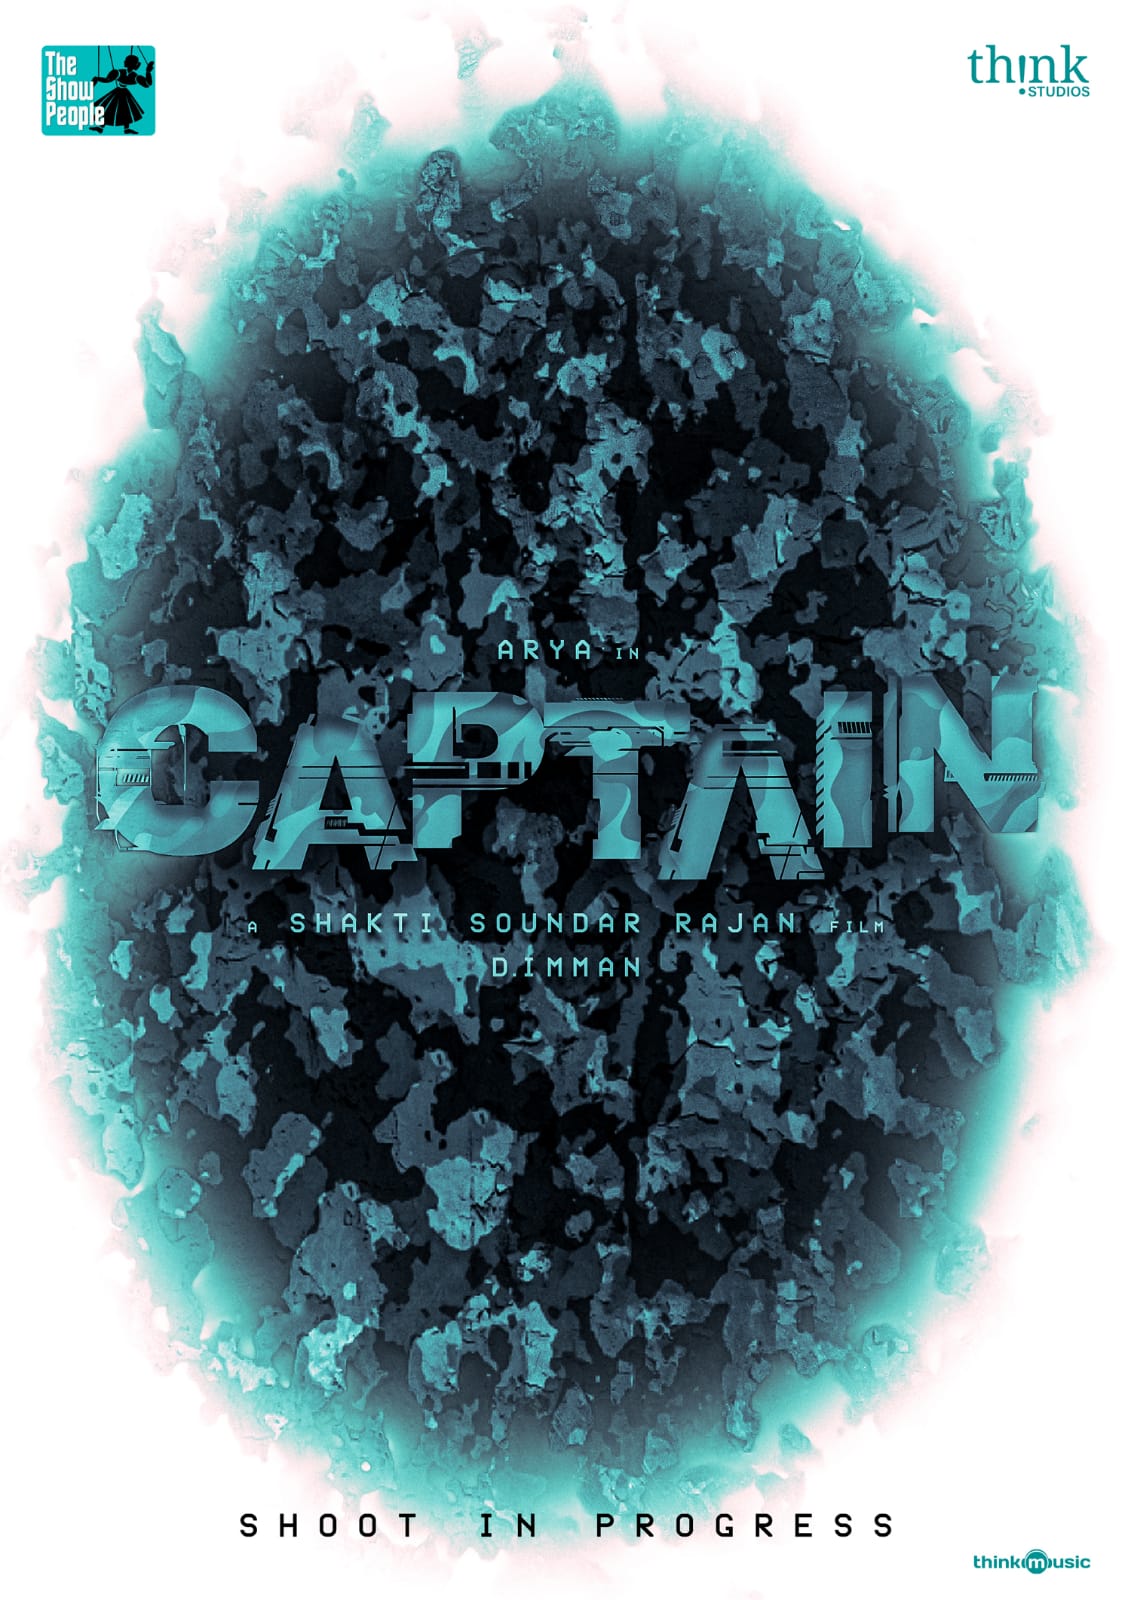 Shakti Soundar Rajan director Arya starrer titled “CAPTAIN”